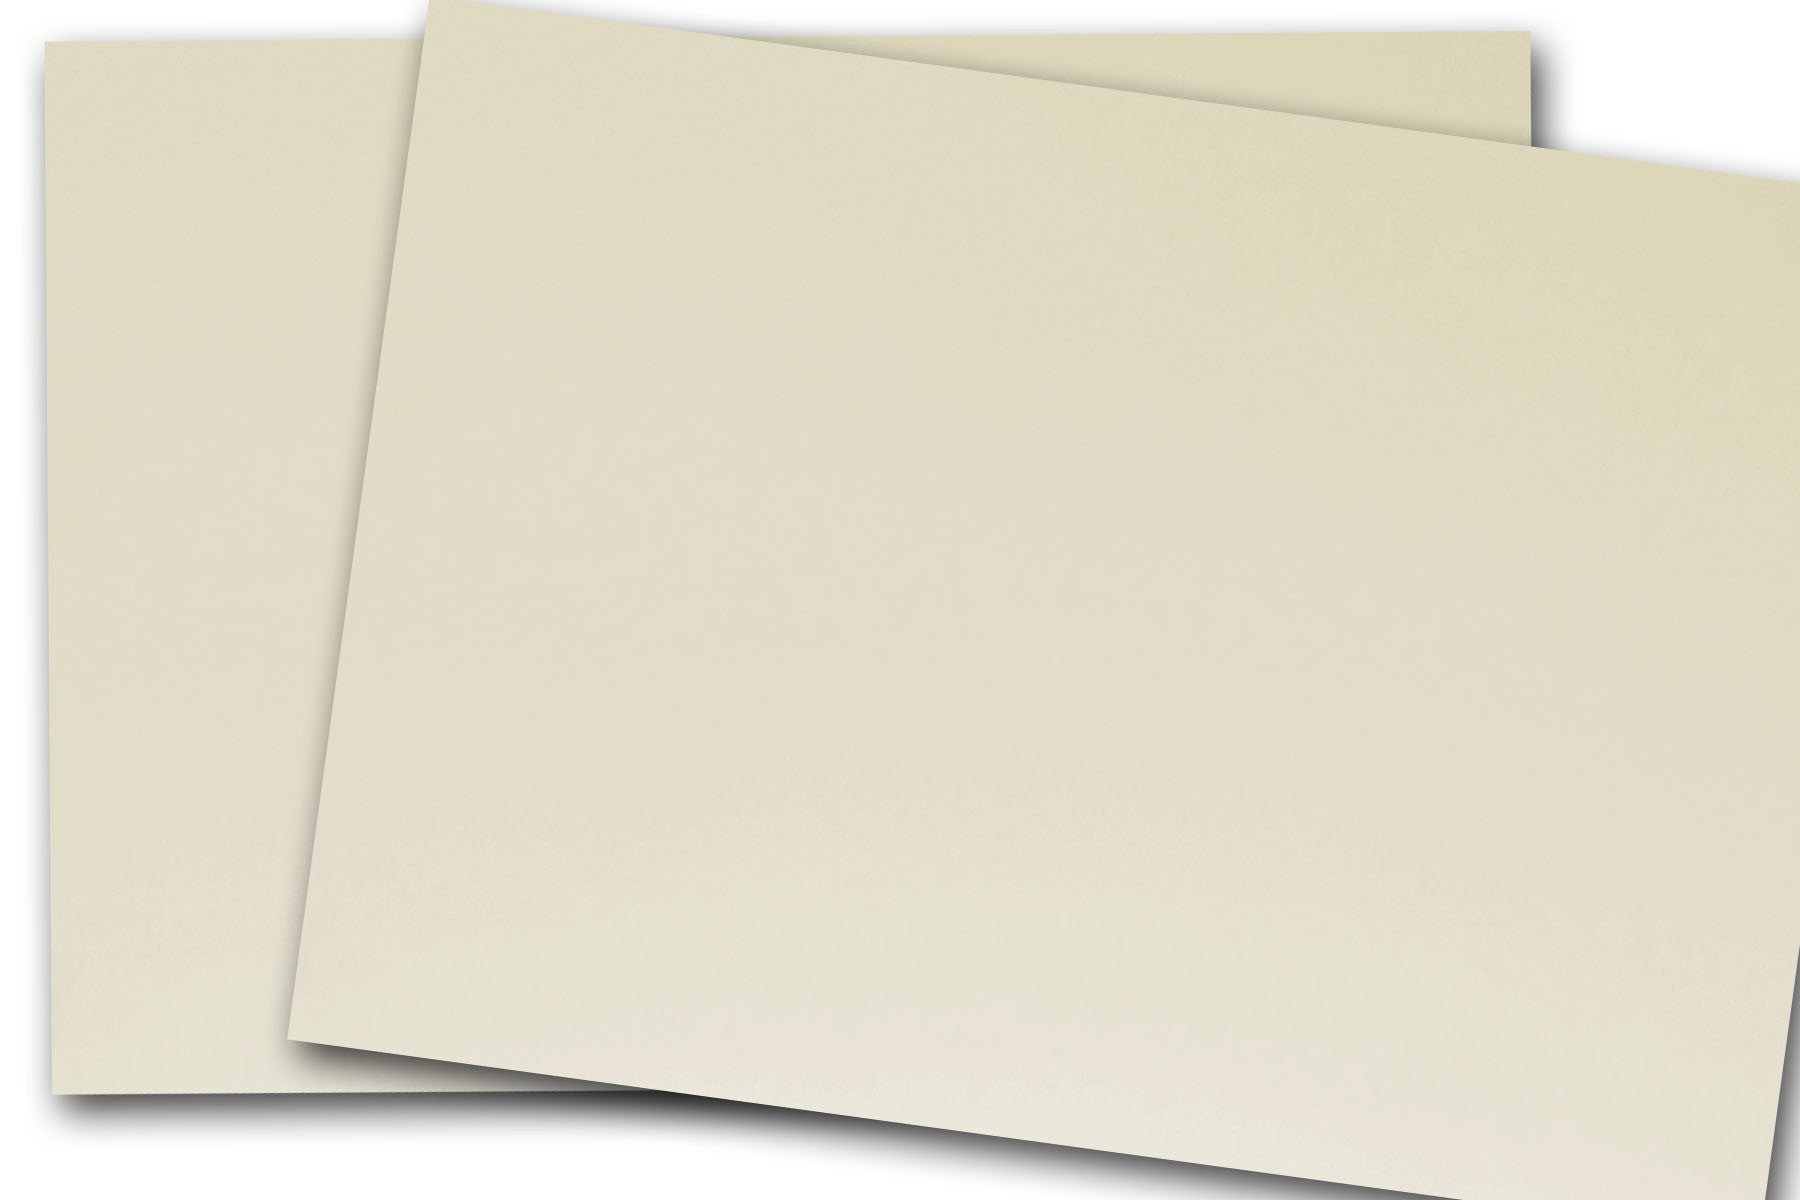 BULK Blank Cougar WHITE A7 5x7 Folded Discount Card Stock